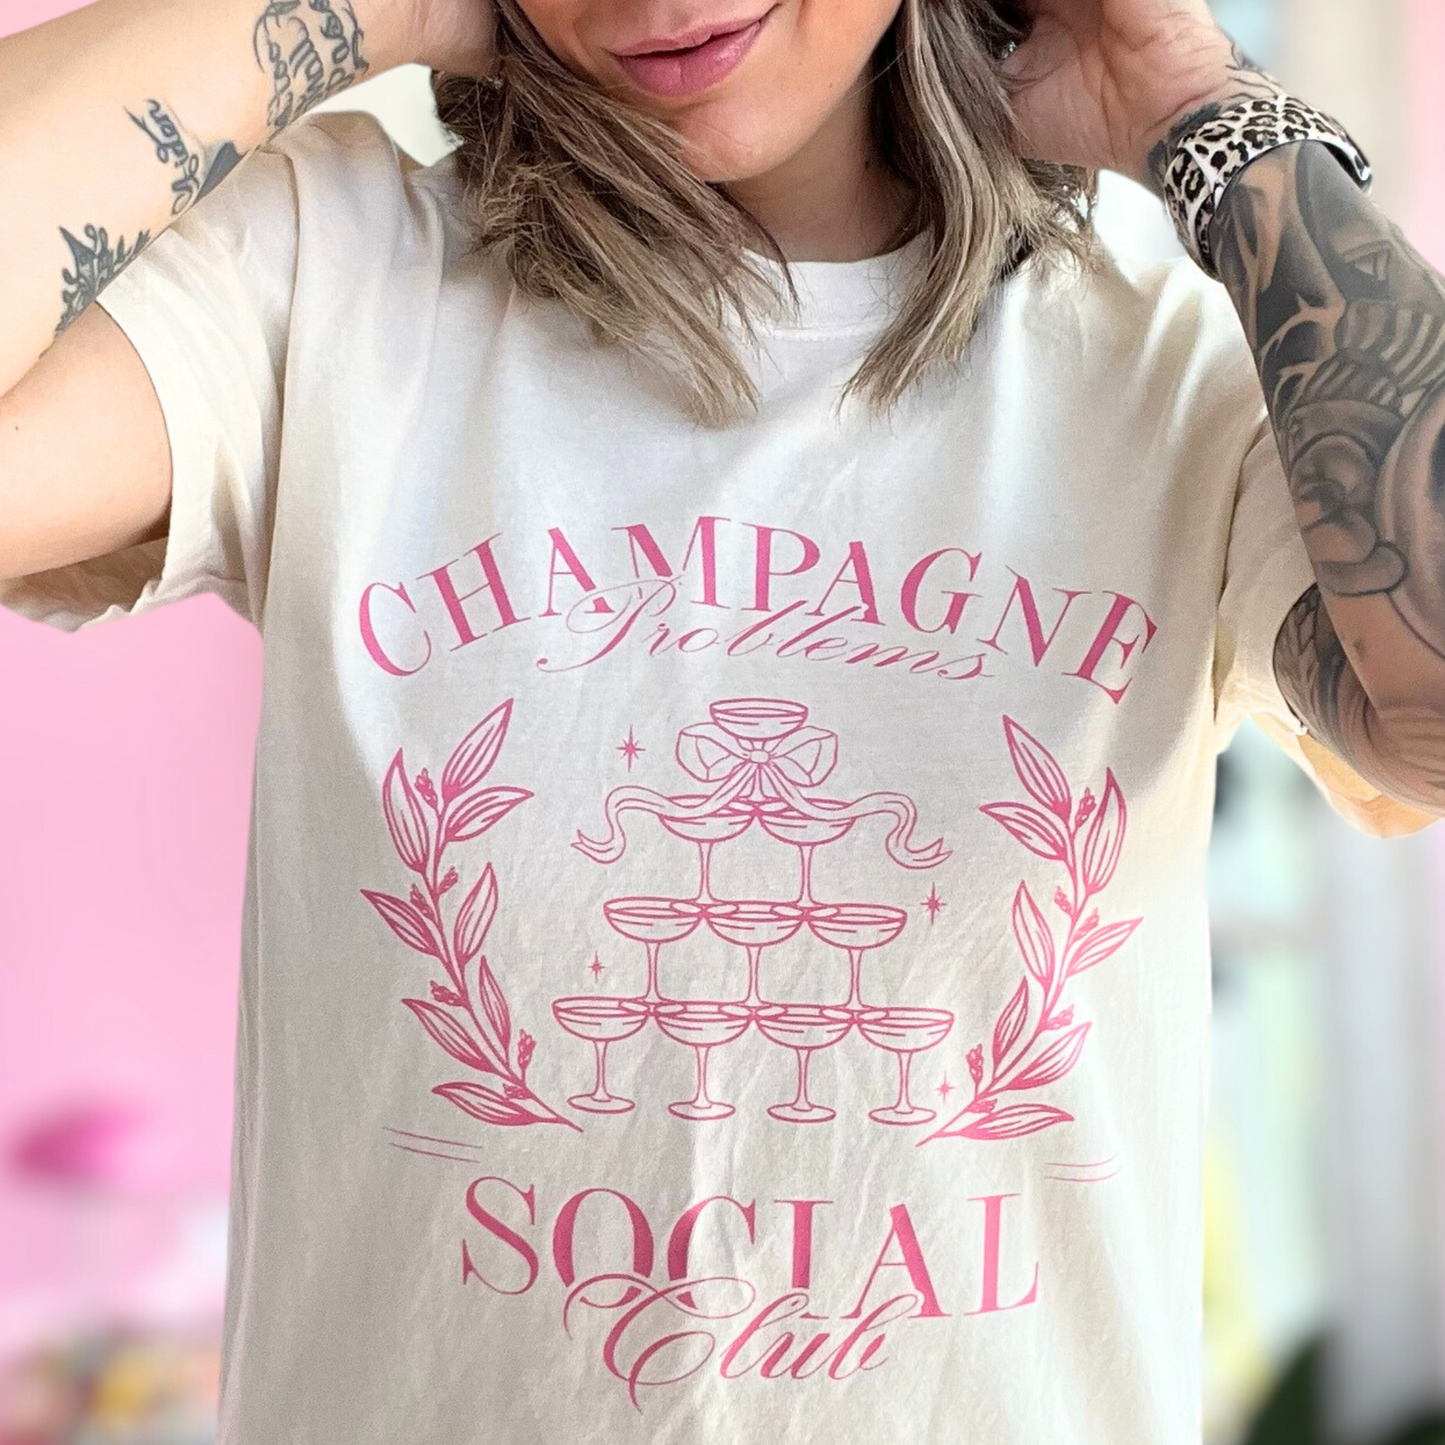 "Champagne Problems Social Club" Tee